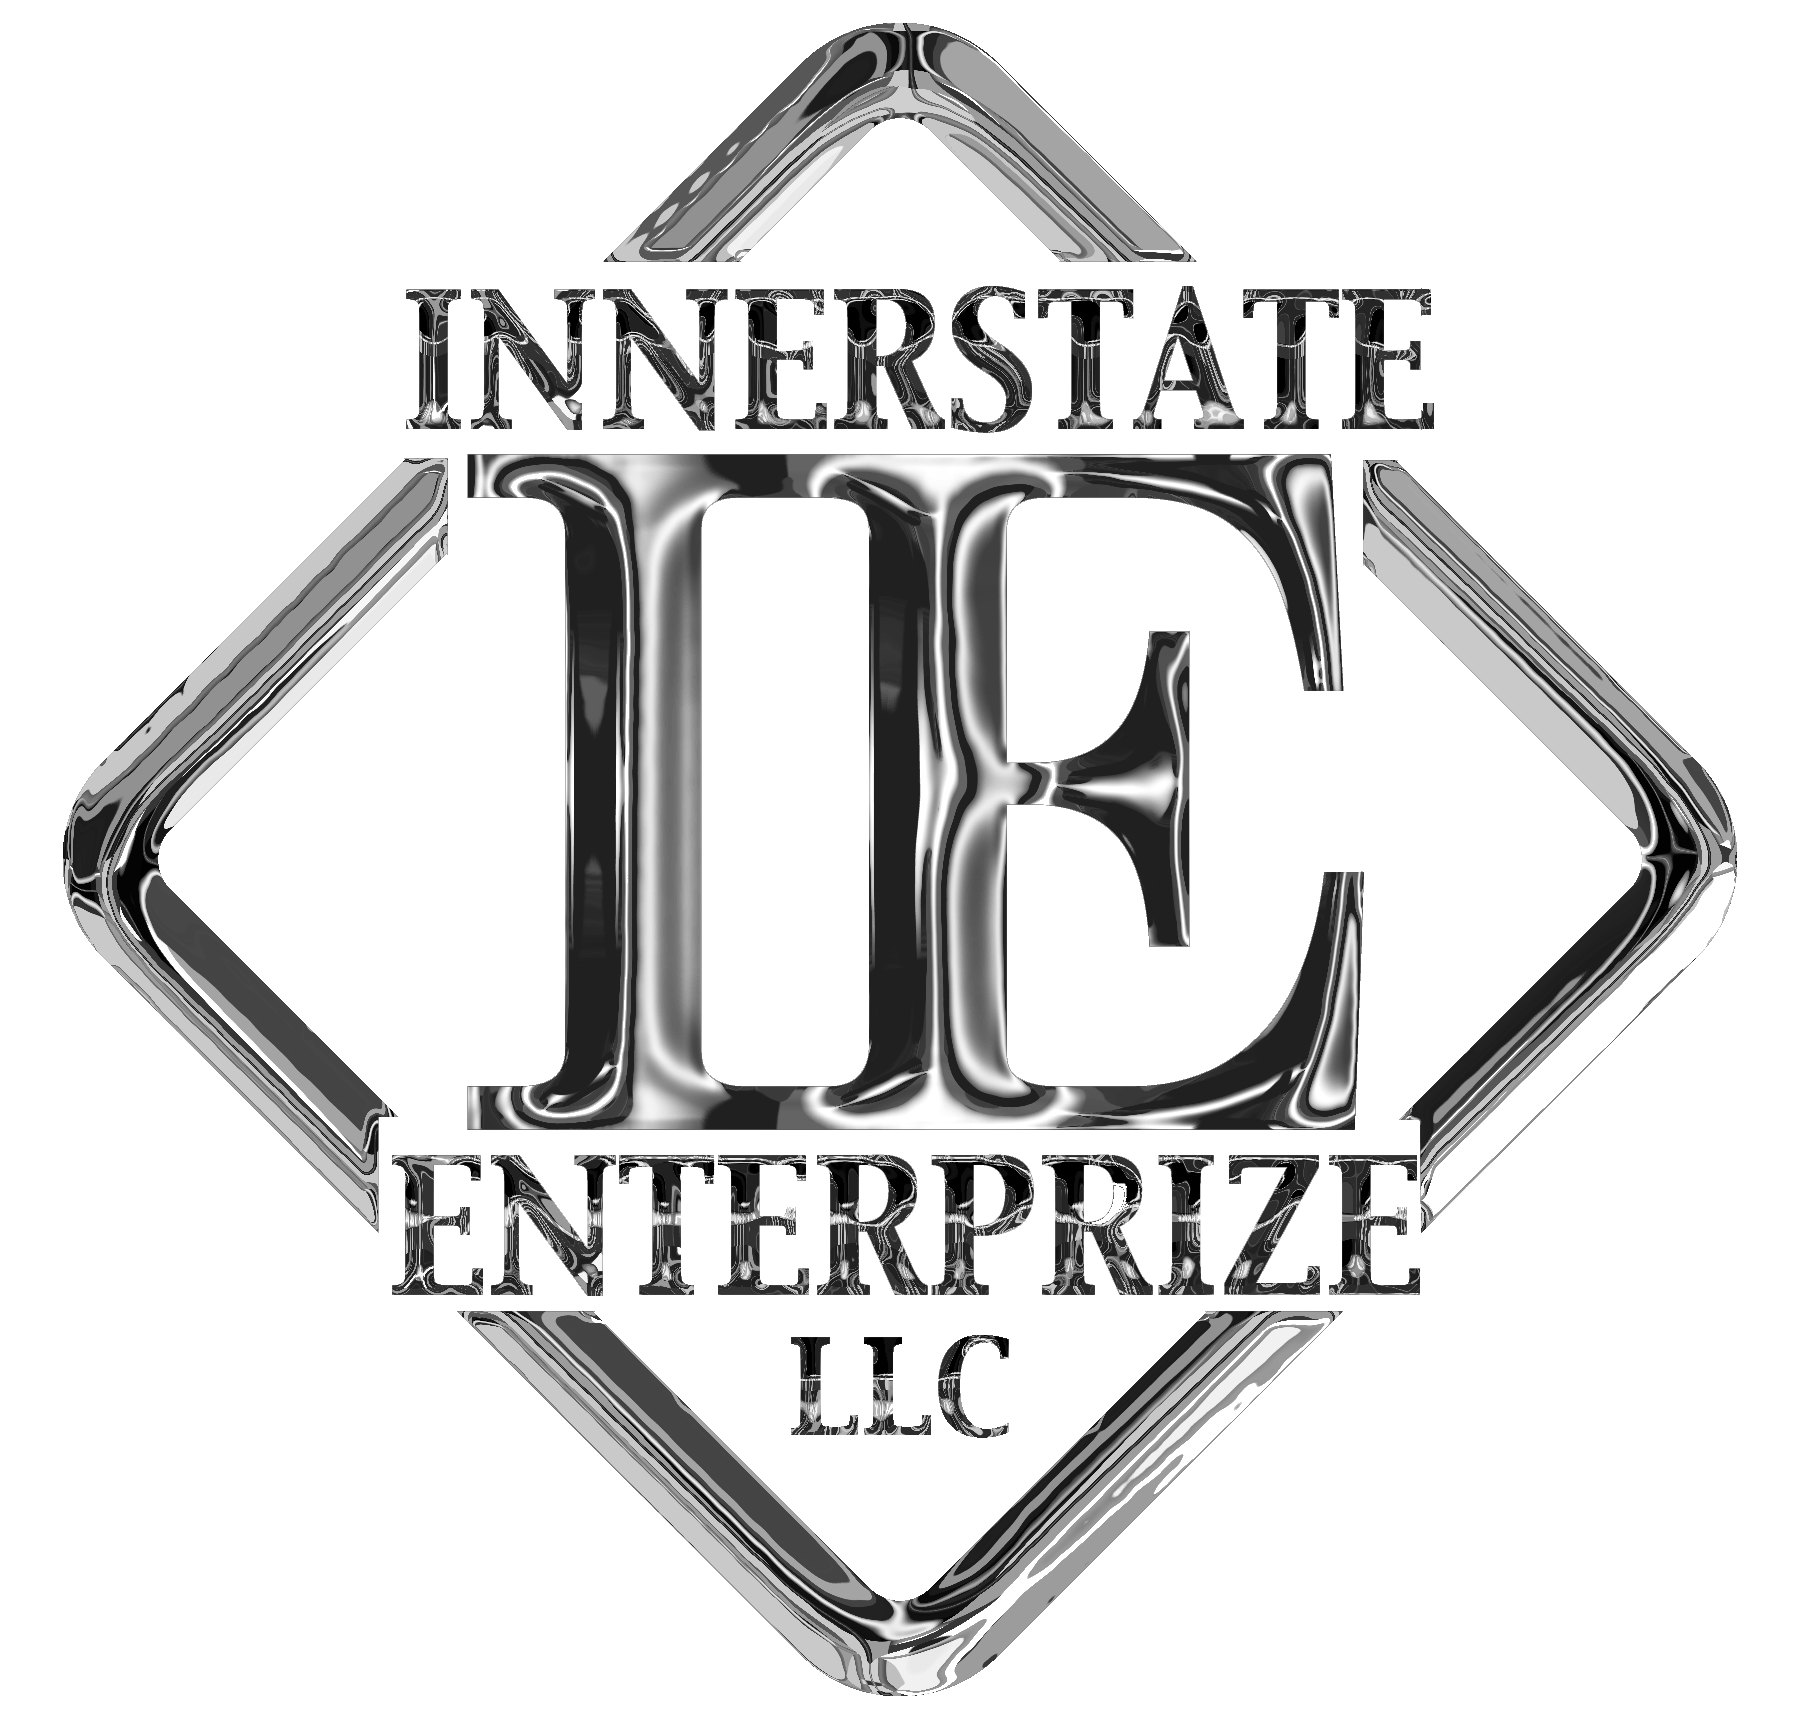 Innerstate Enterprize LLC